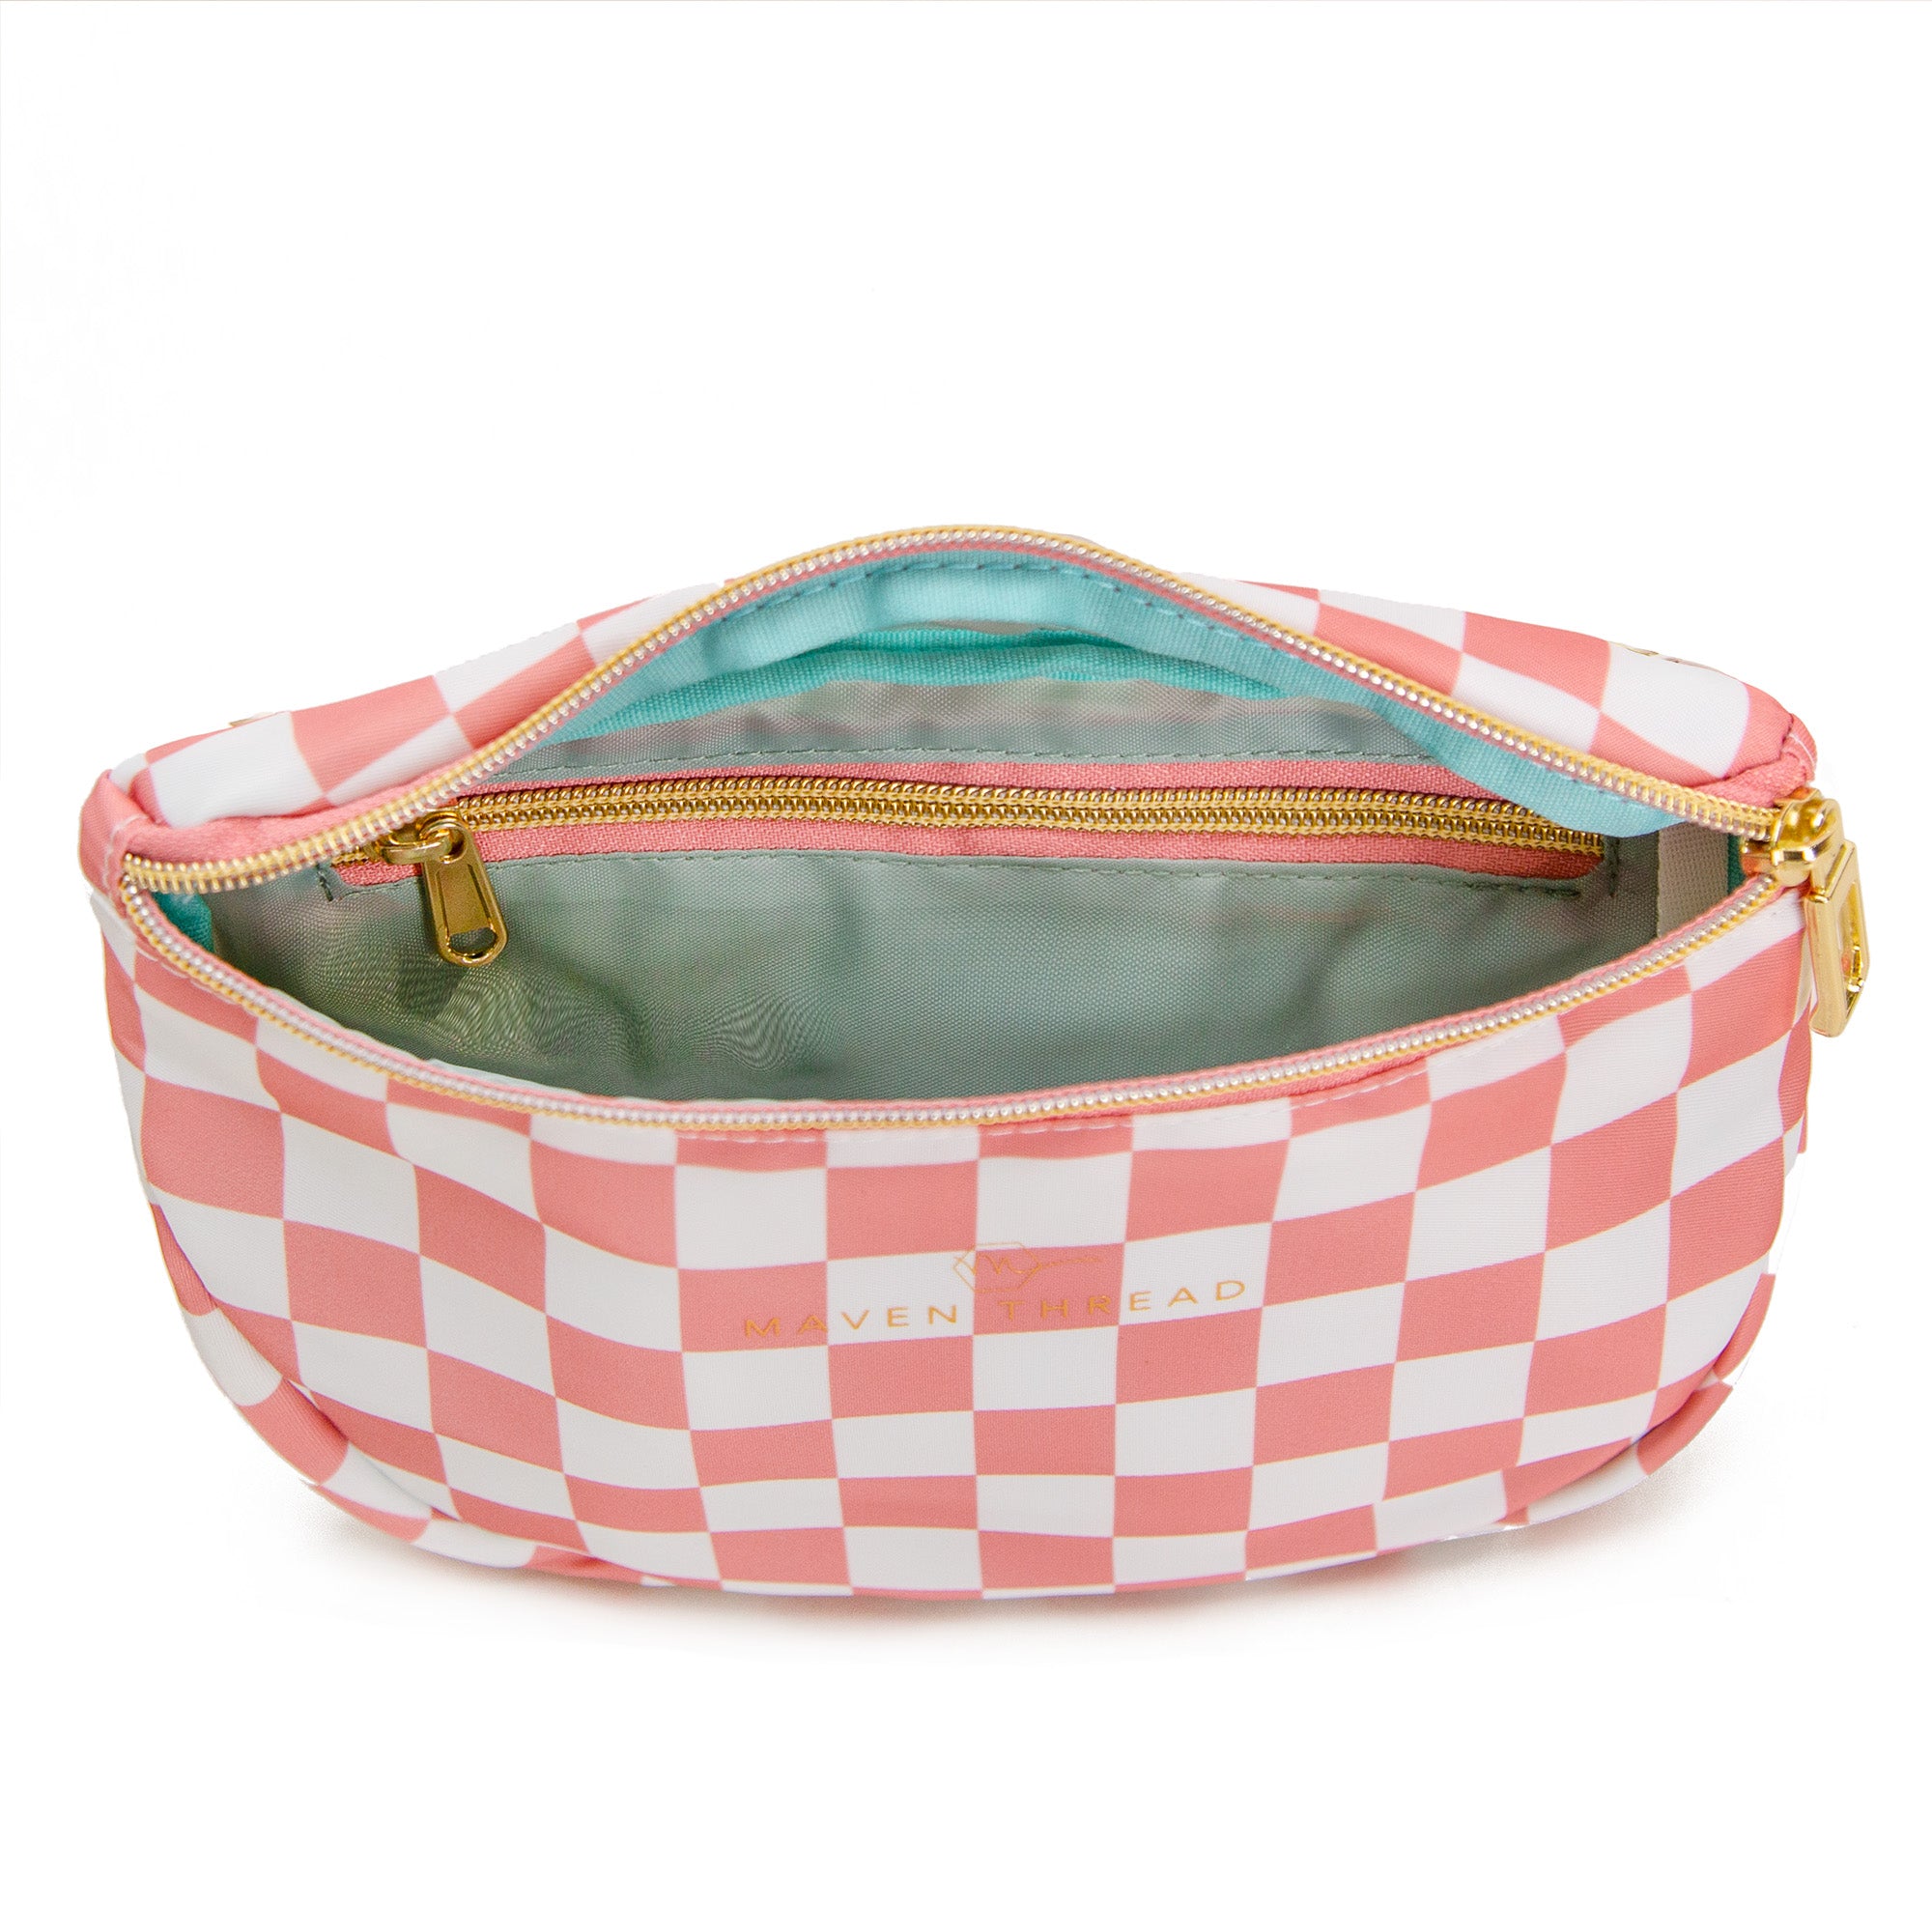 3-in-1 Crossbody Bag - Pink Checkered – Maven Thread